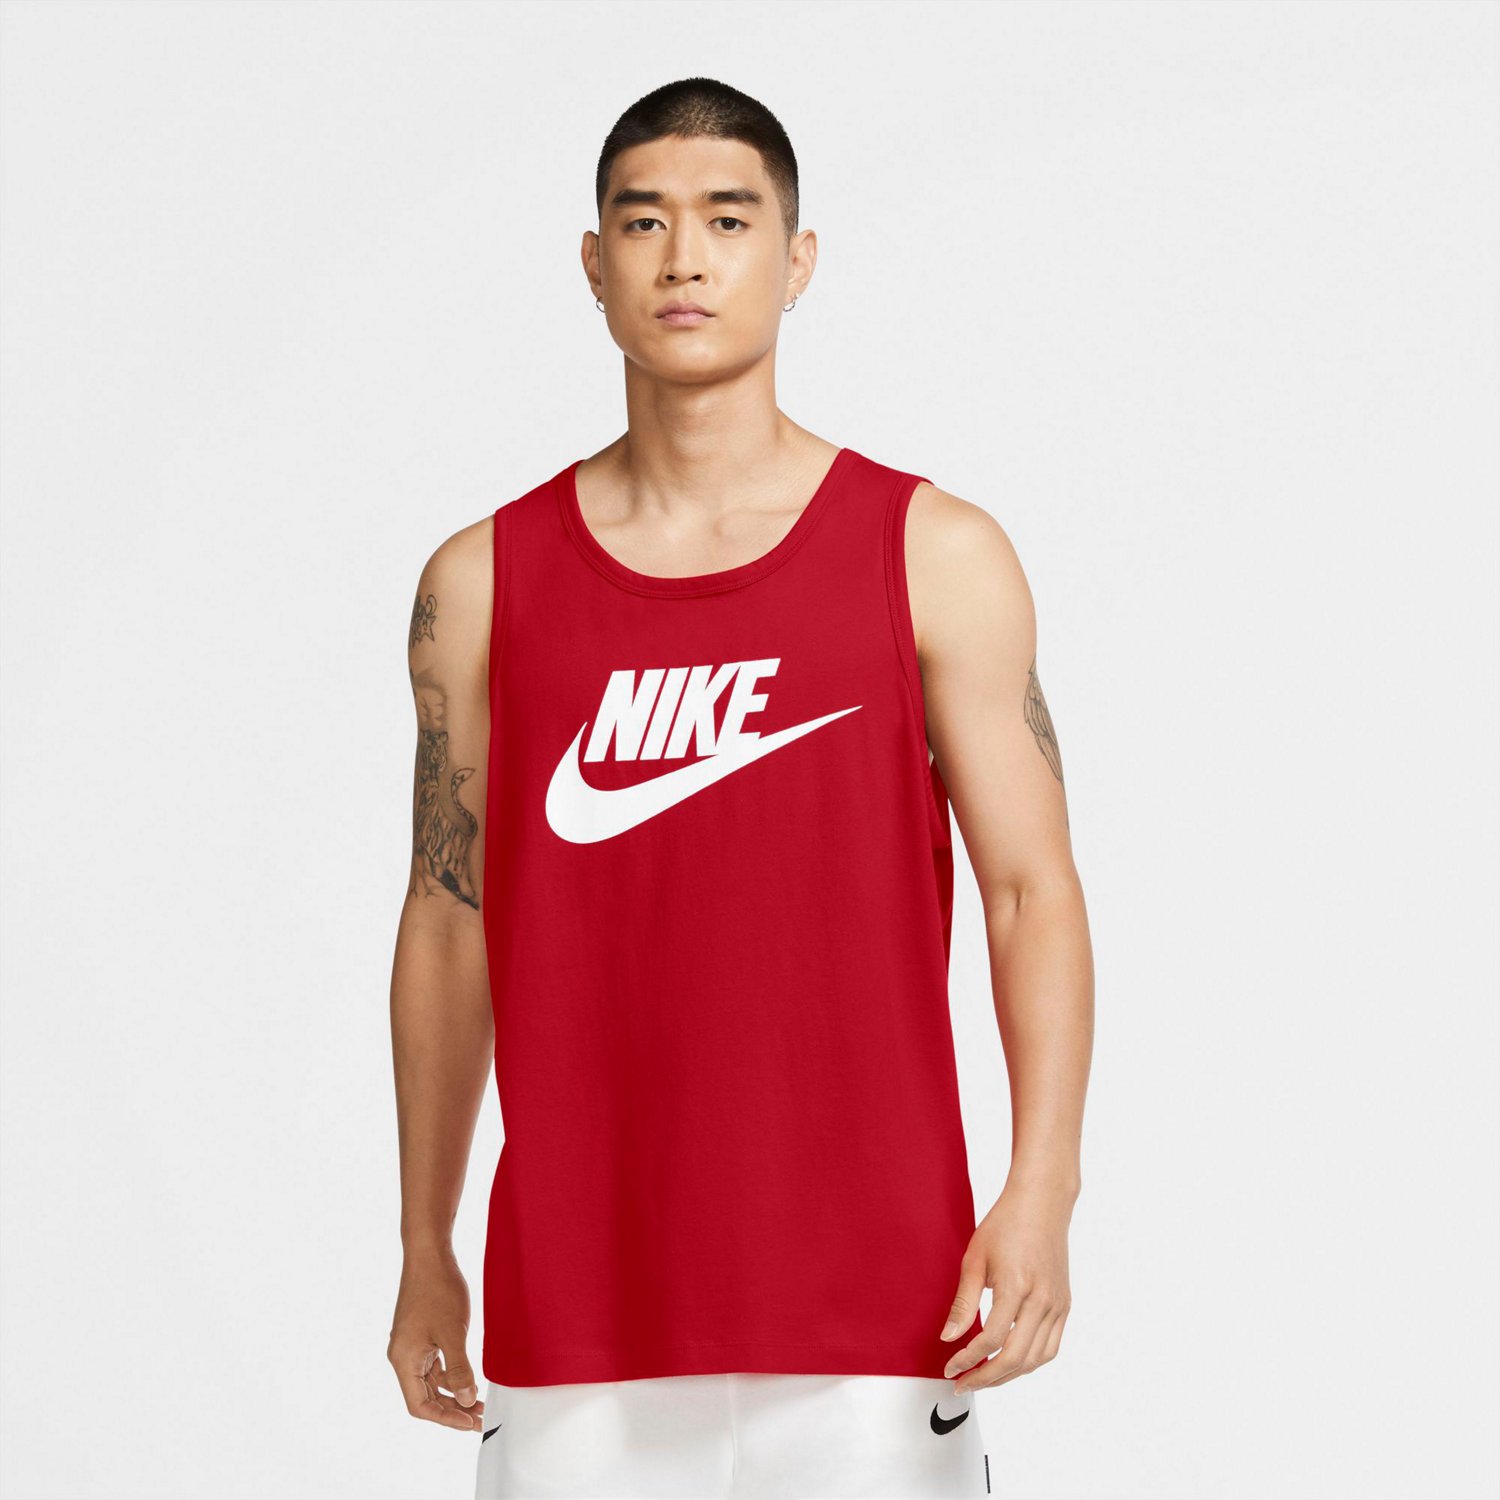 Nike Sportswear Men's Sleevless Tank Top Shirt (Red/White, XXL) – BrickSeek